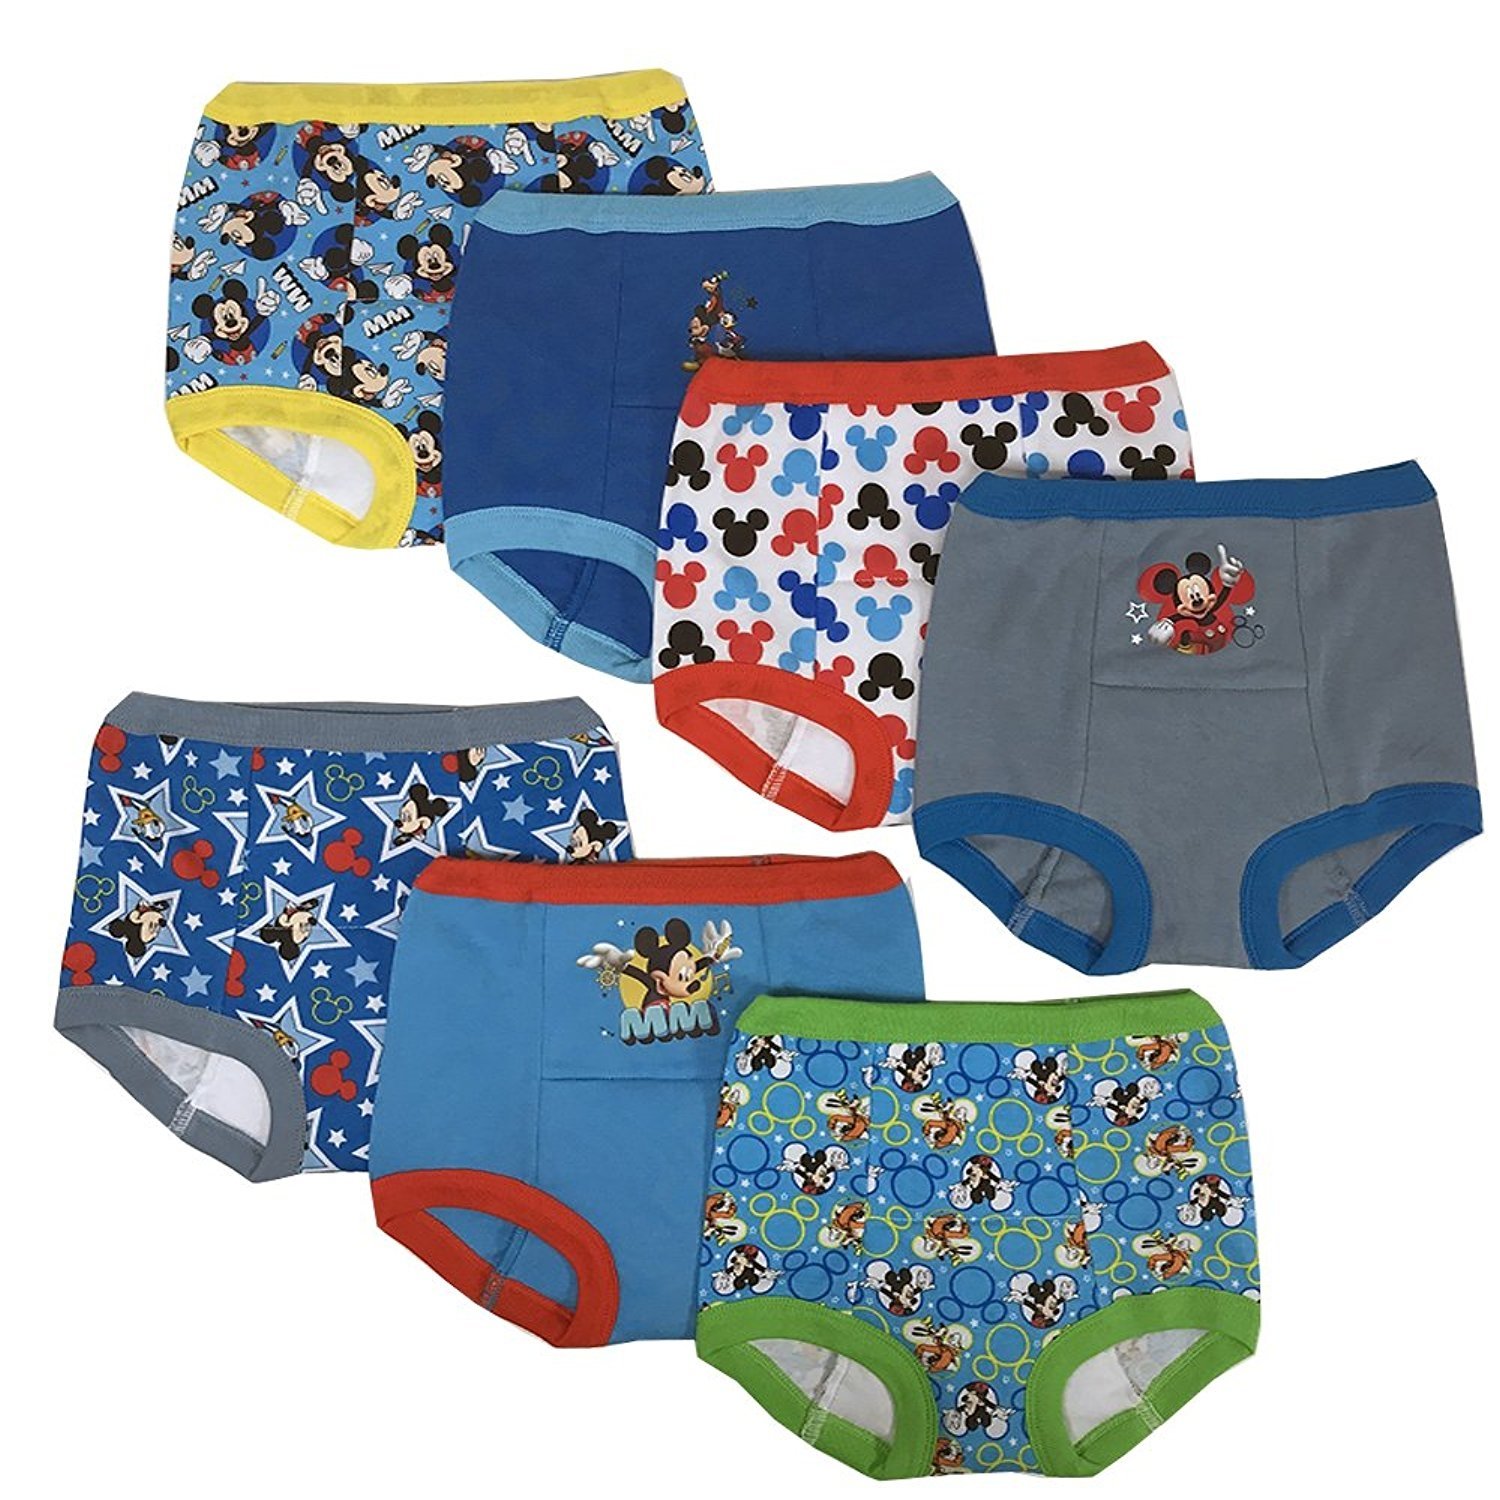 Disney Mickey Mouse Boys Potty Training Pants 7-pack Underwear